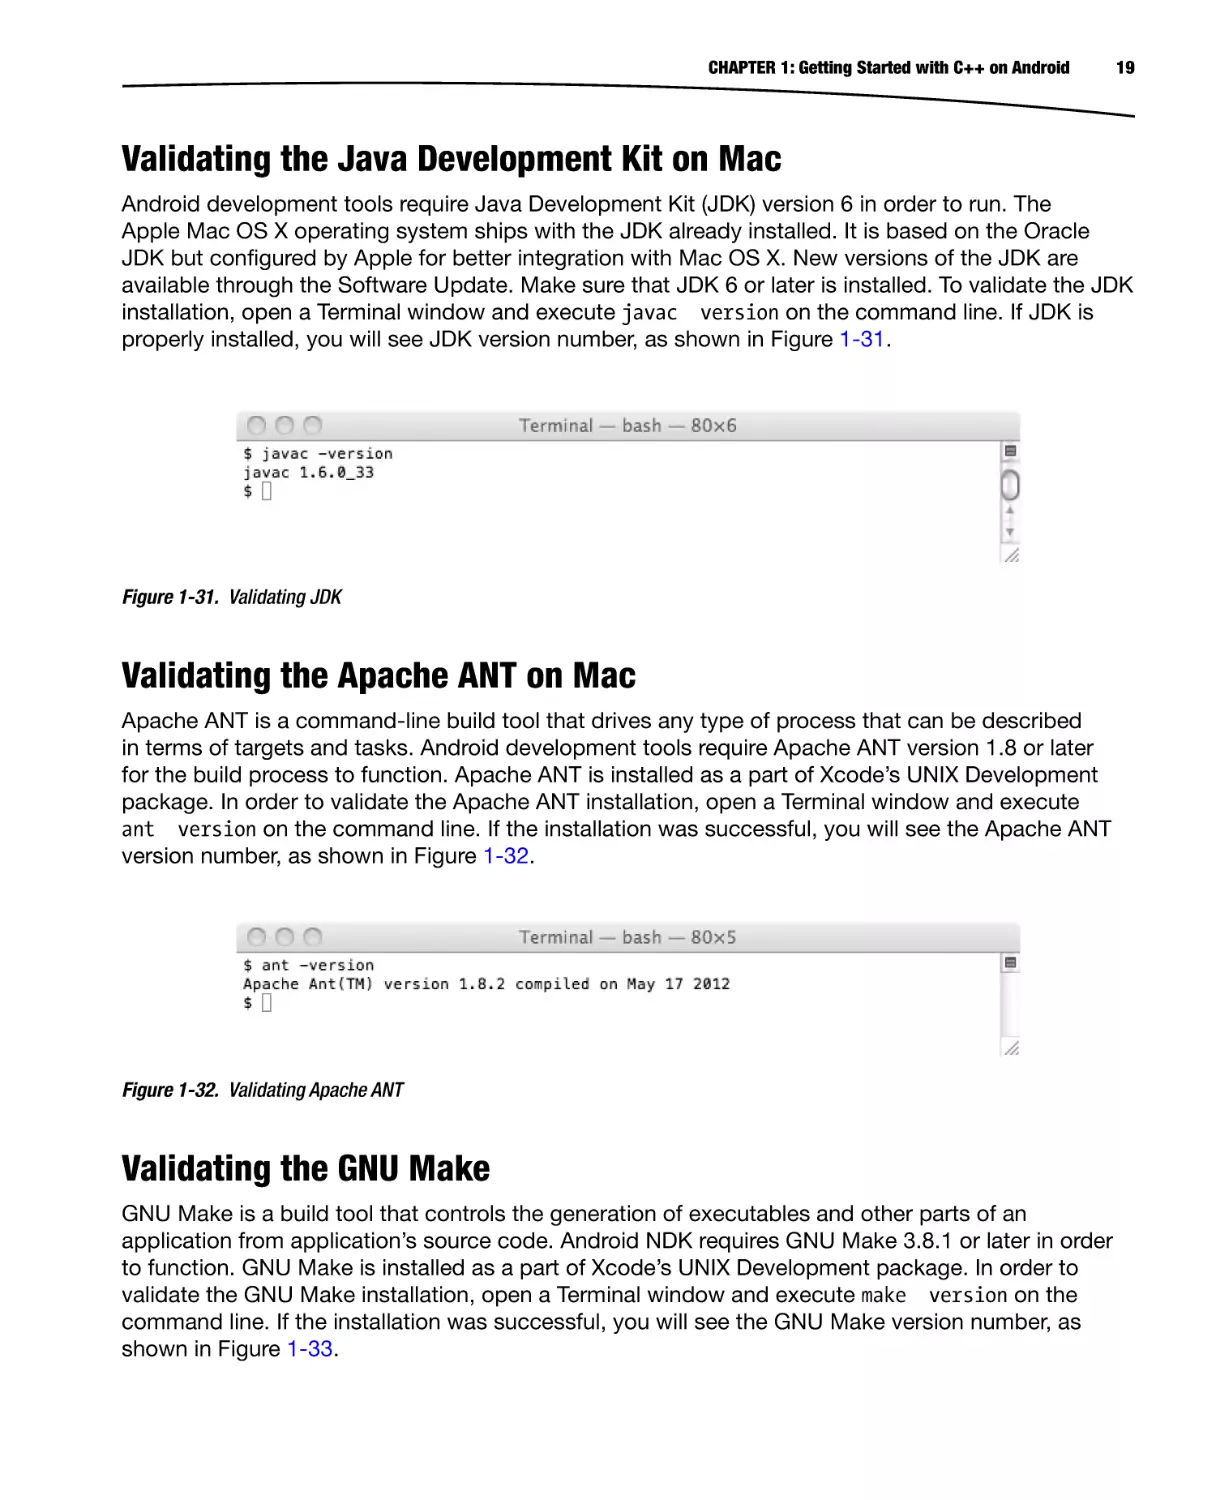 Validating the Java Development Kit on Mac
Validating the Apache ANT on Mac
Validating the GNU Make